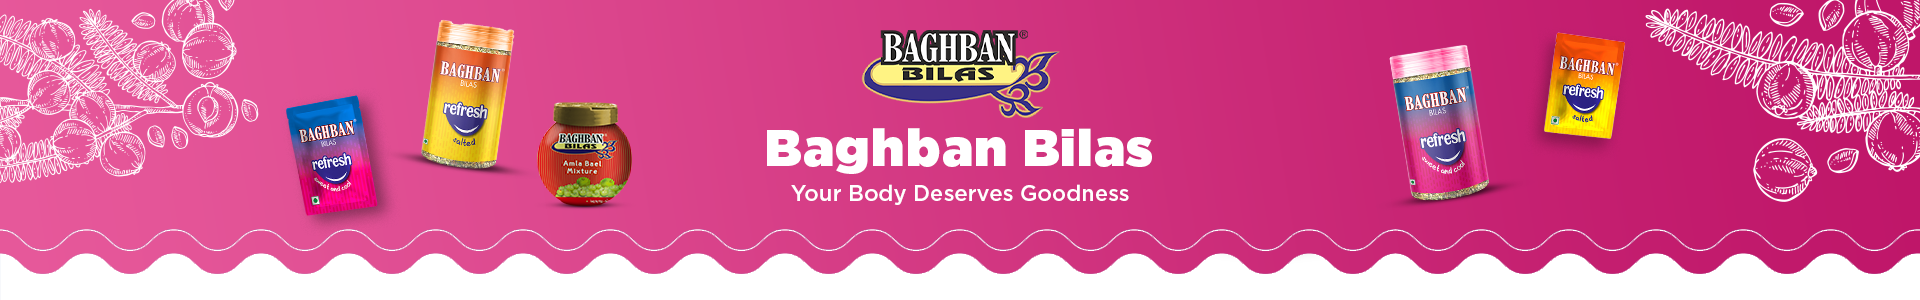 Baghban Bilas